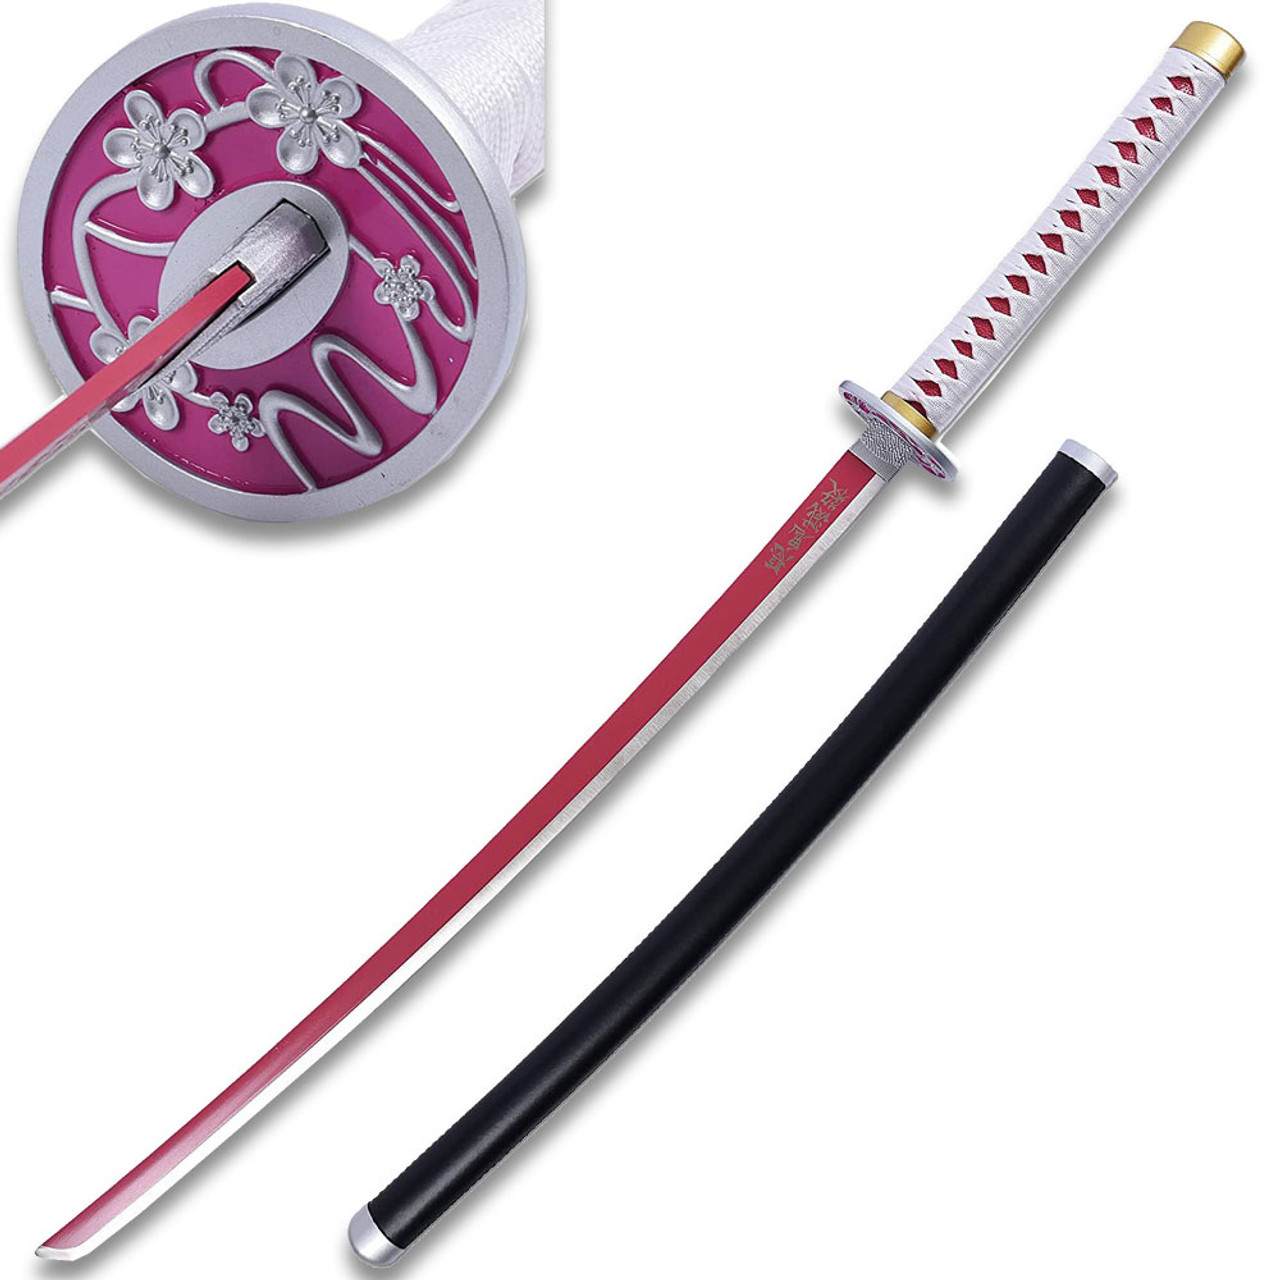 Strongest Anime Swords